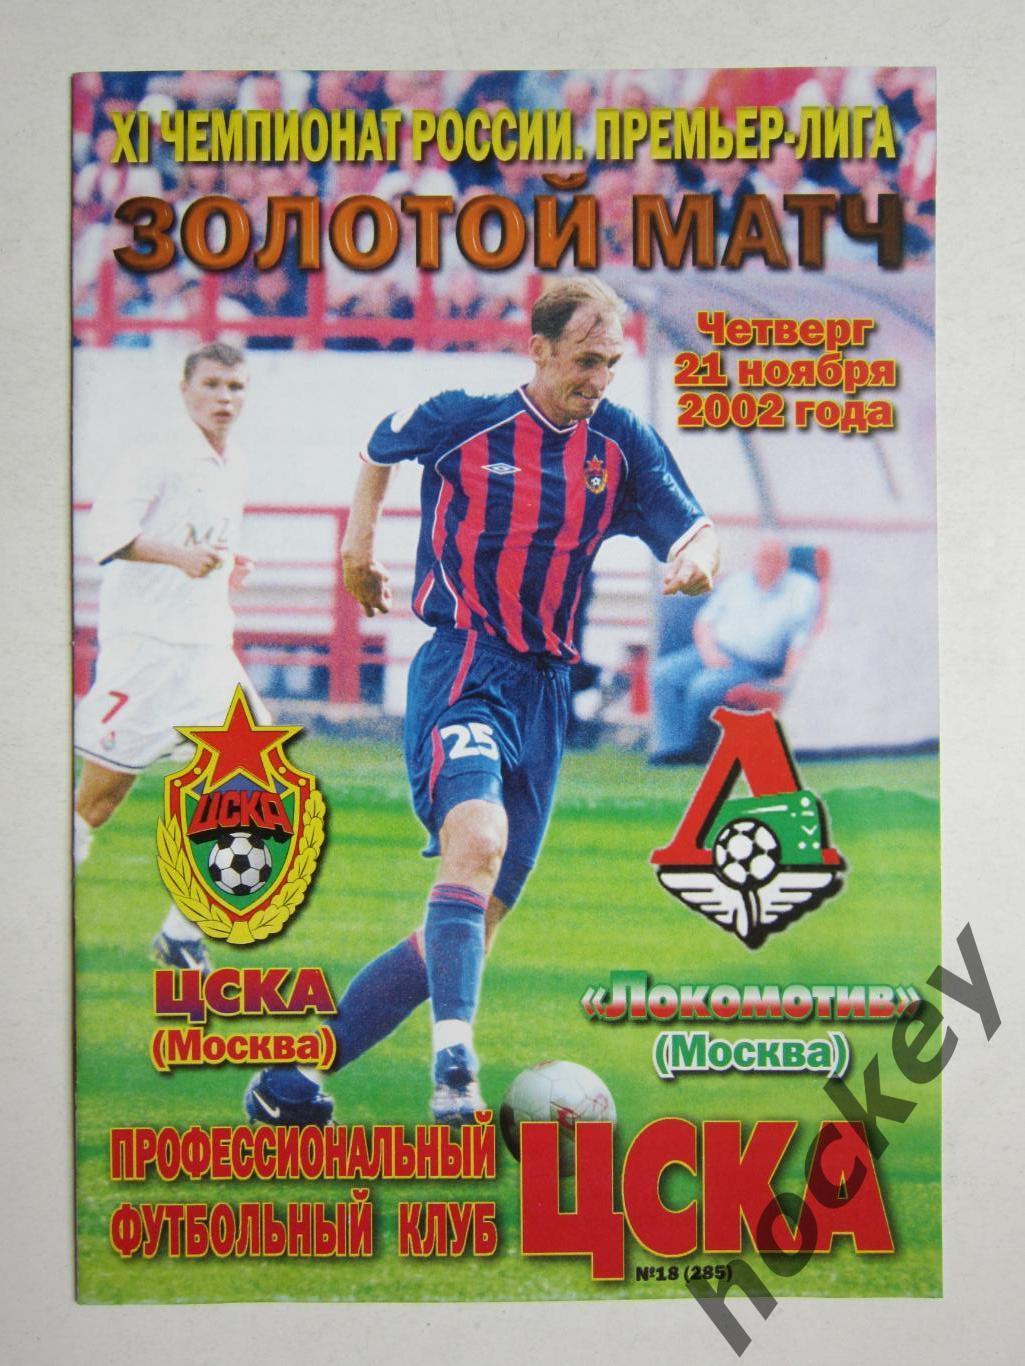 ЦСКА Москва - Локомотив Москва 21.11.2002. Золотой матч